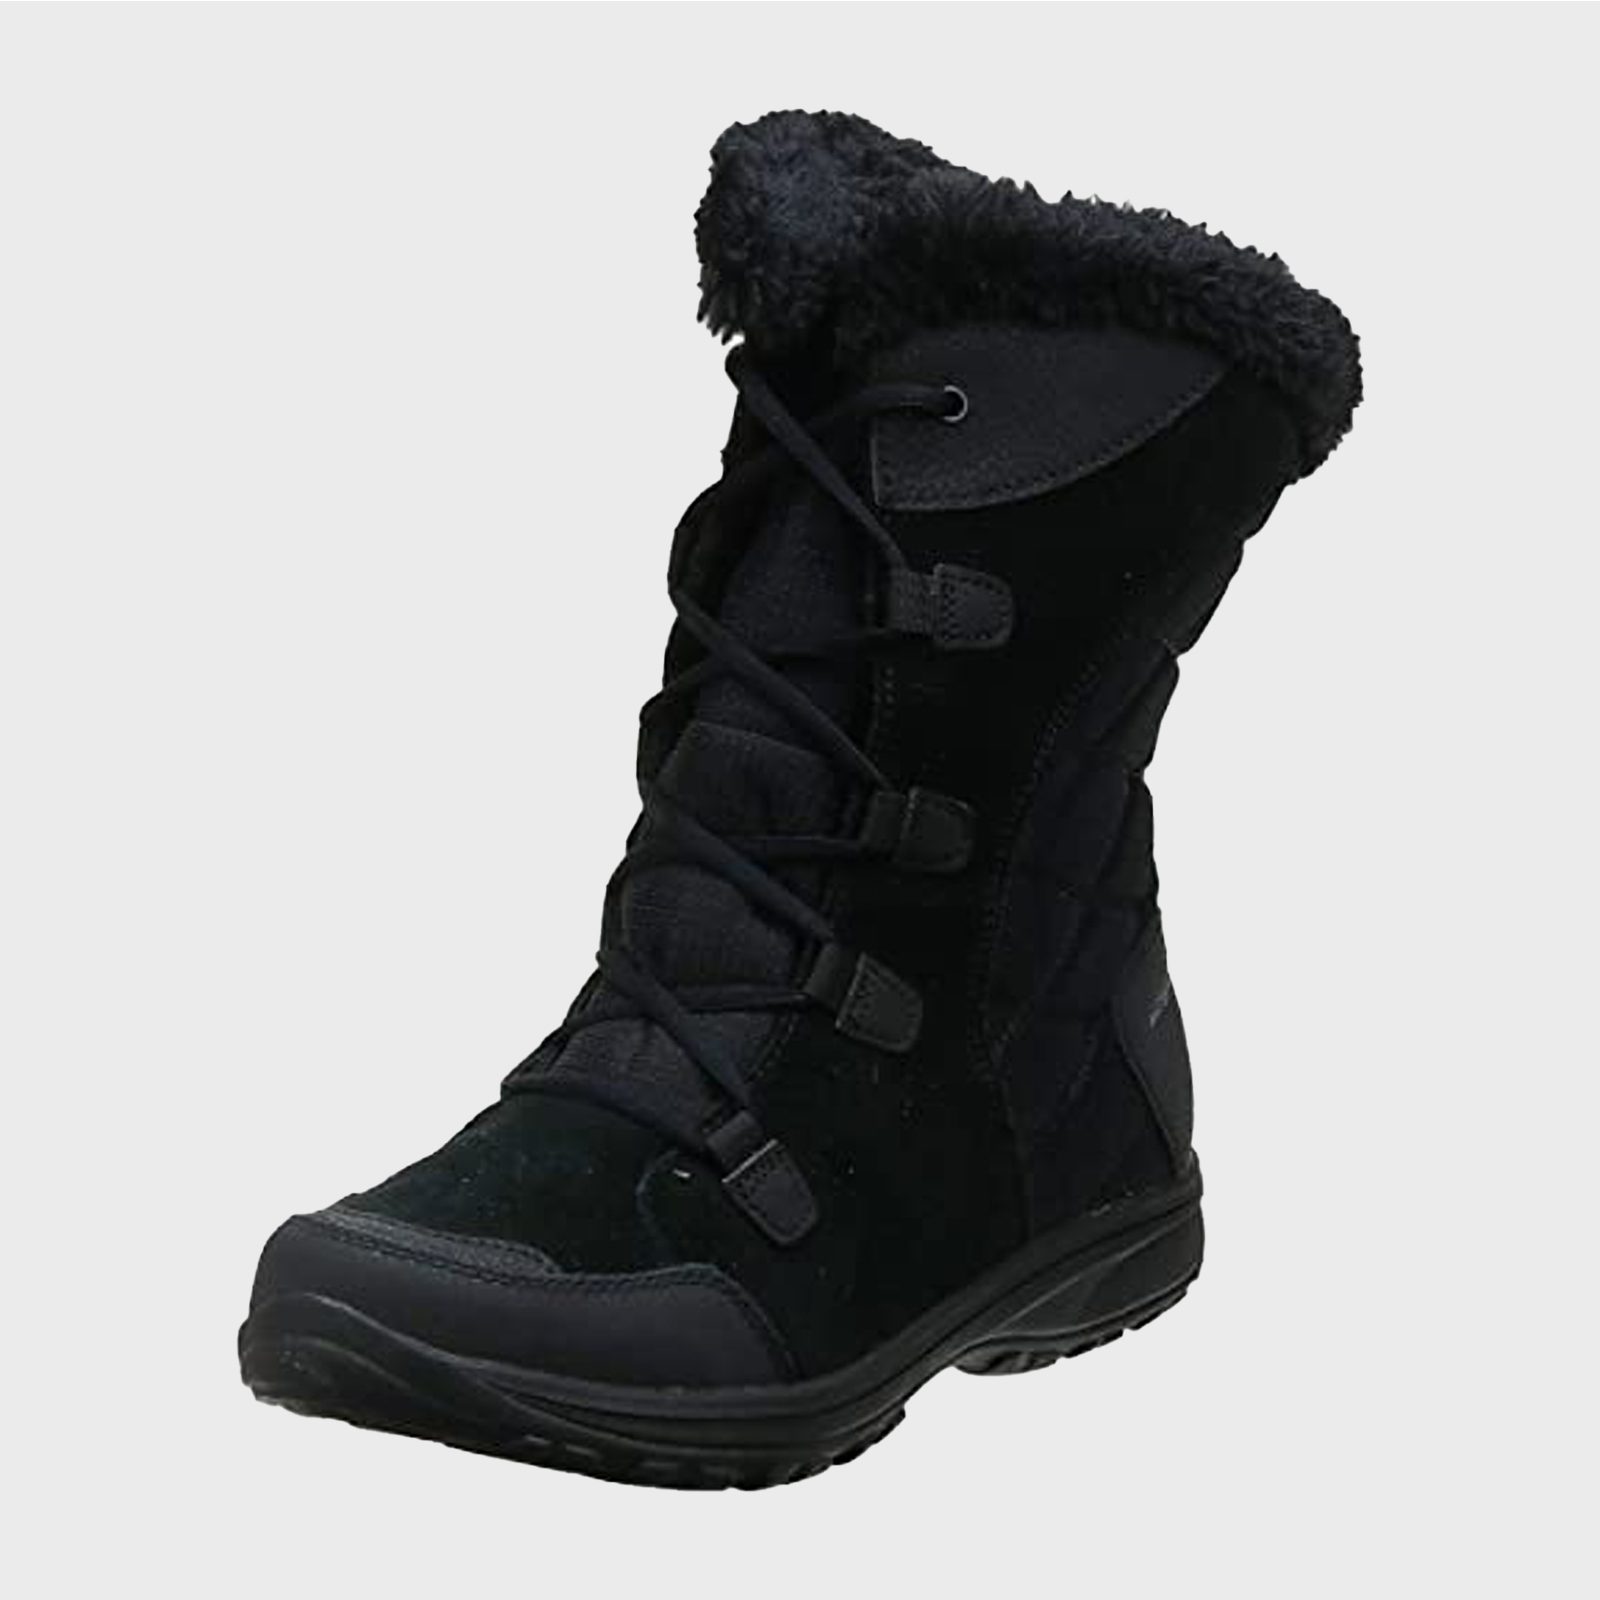 30 Best Snow Boots for Women 2022 — Warm, Waterproof Snow Boots